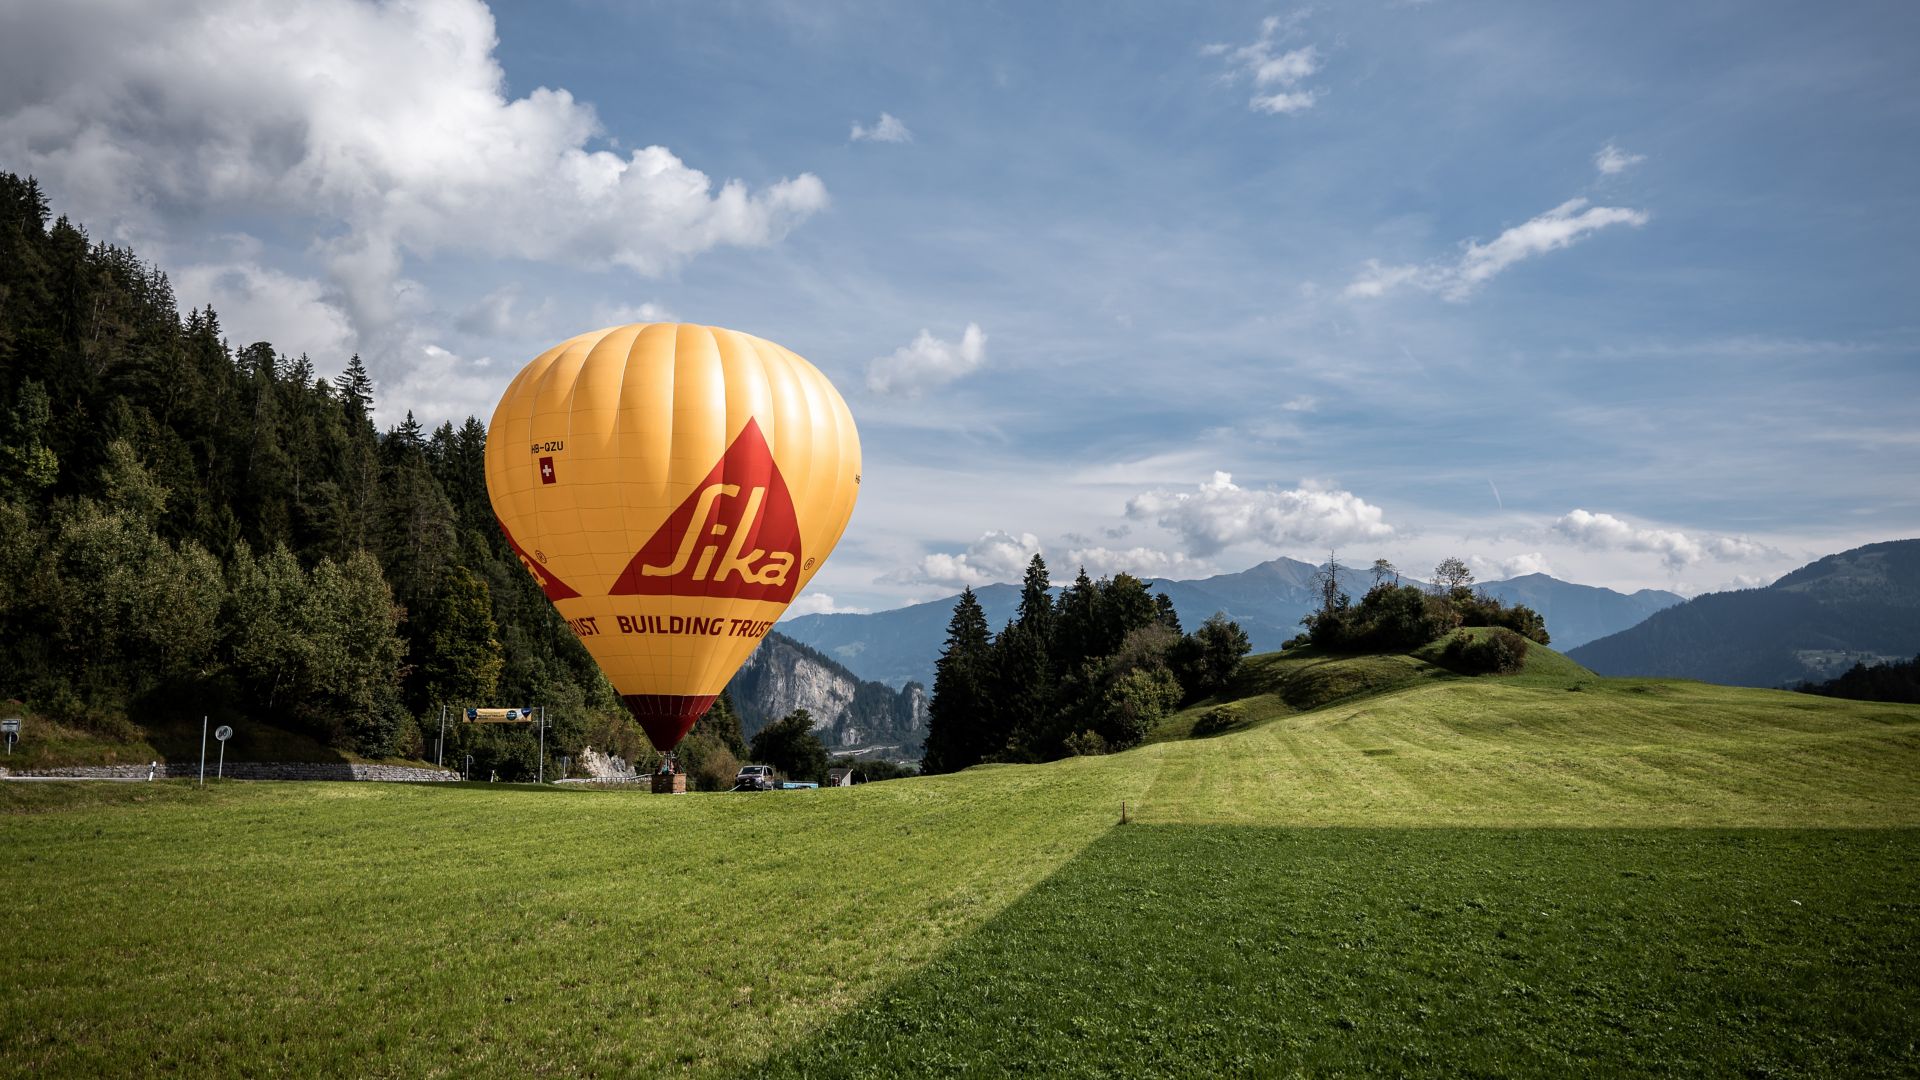 Sika Hot Air Balloon in Switzerland